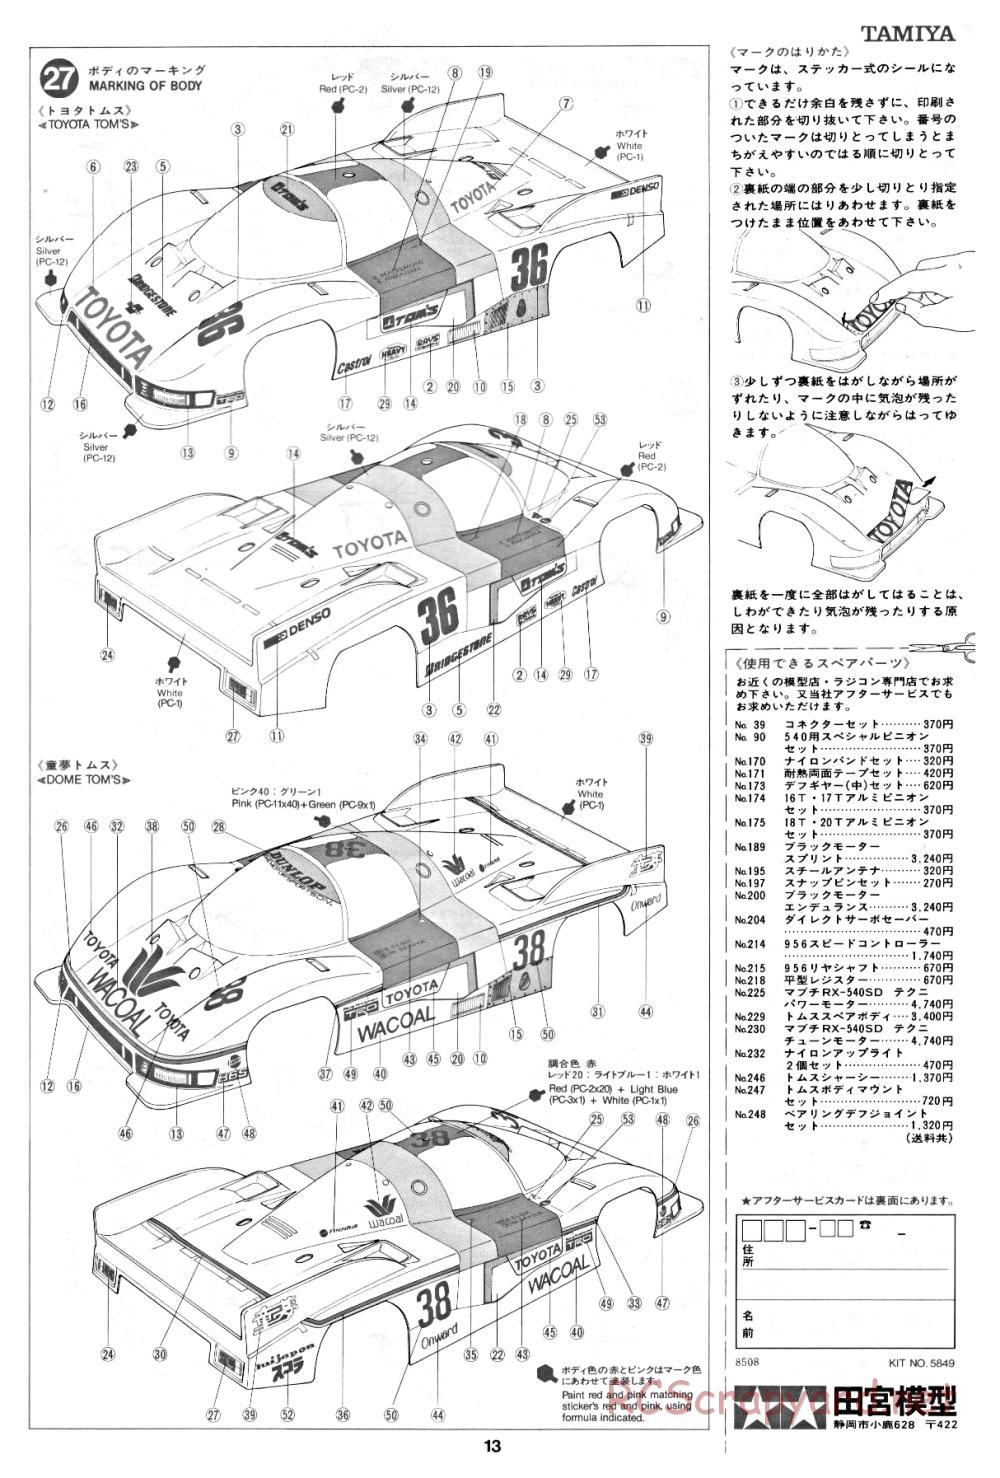 Tamiya - Toyota Tom's 84C - RM MK.6 - 58049 - Manual - Page 13